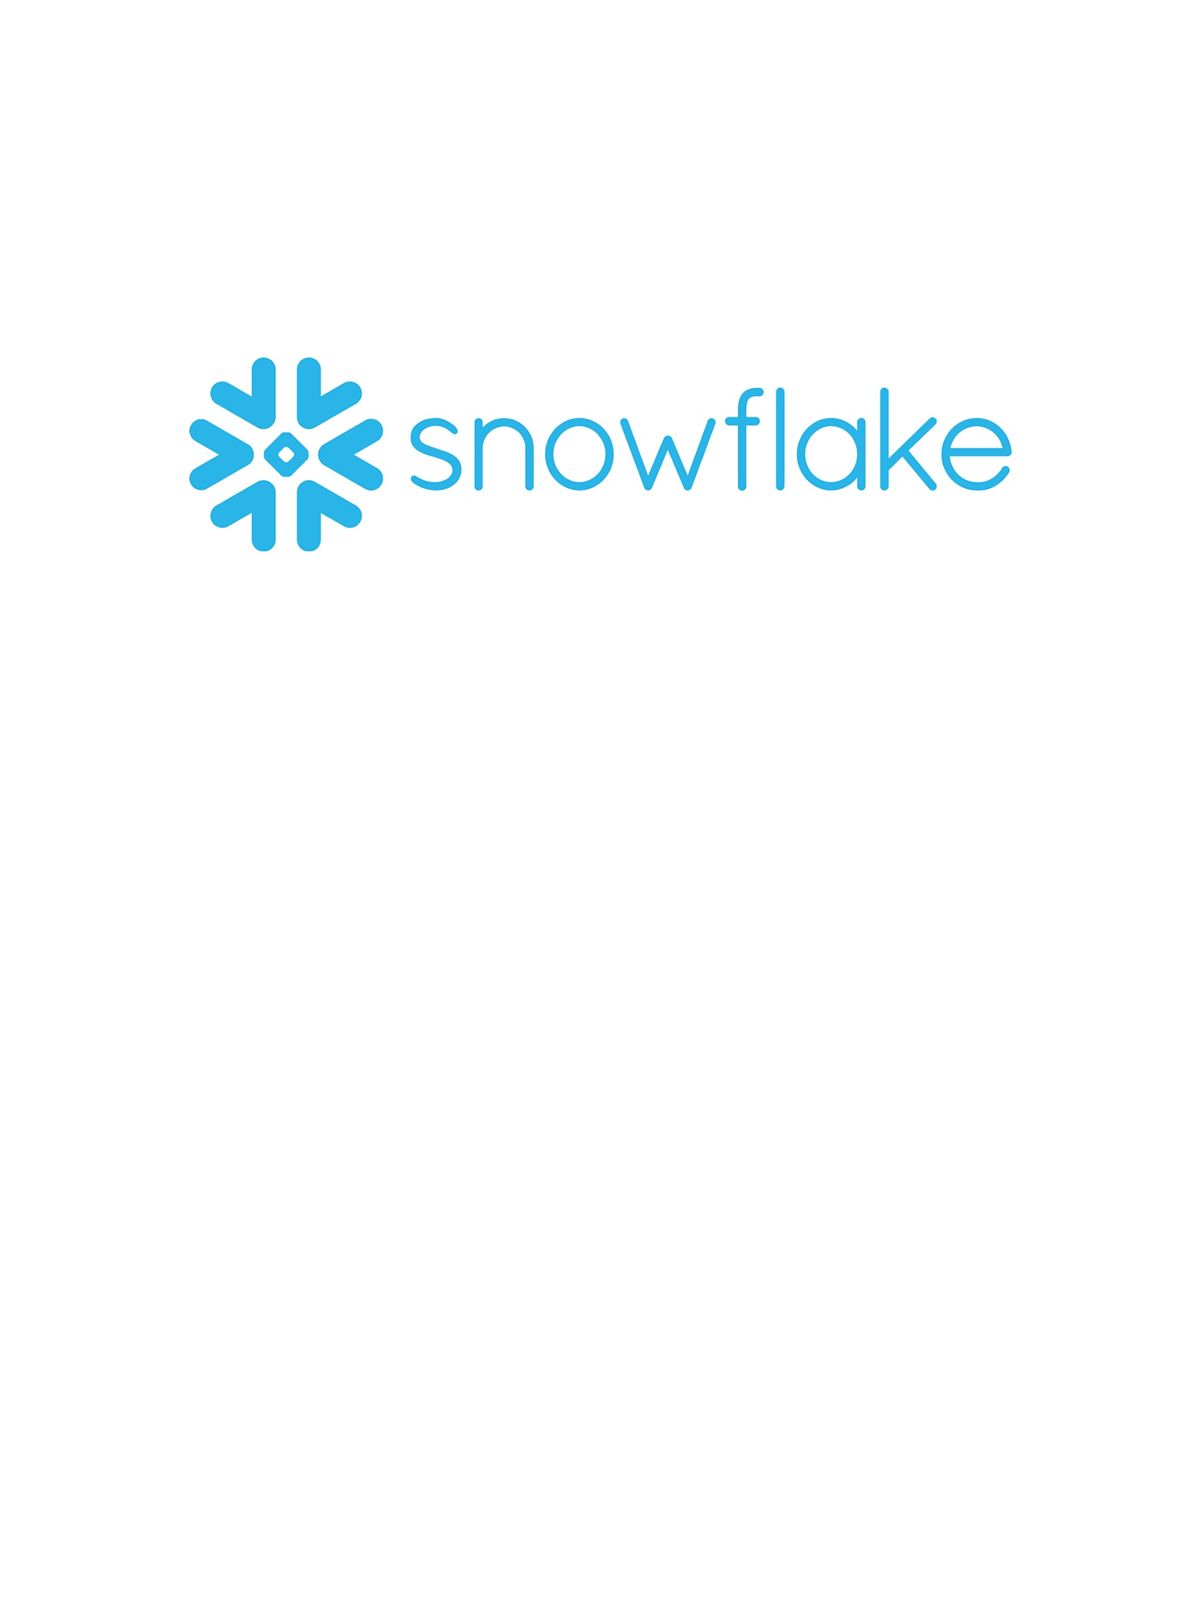 4 Weeks Snowflake cloud data platform Training Course Sacramento